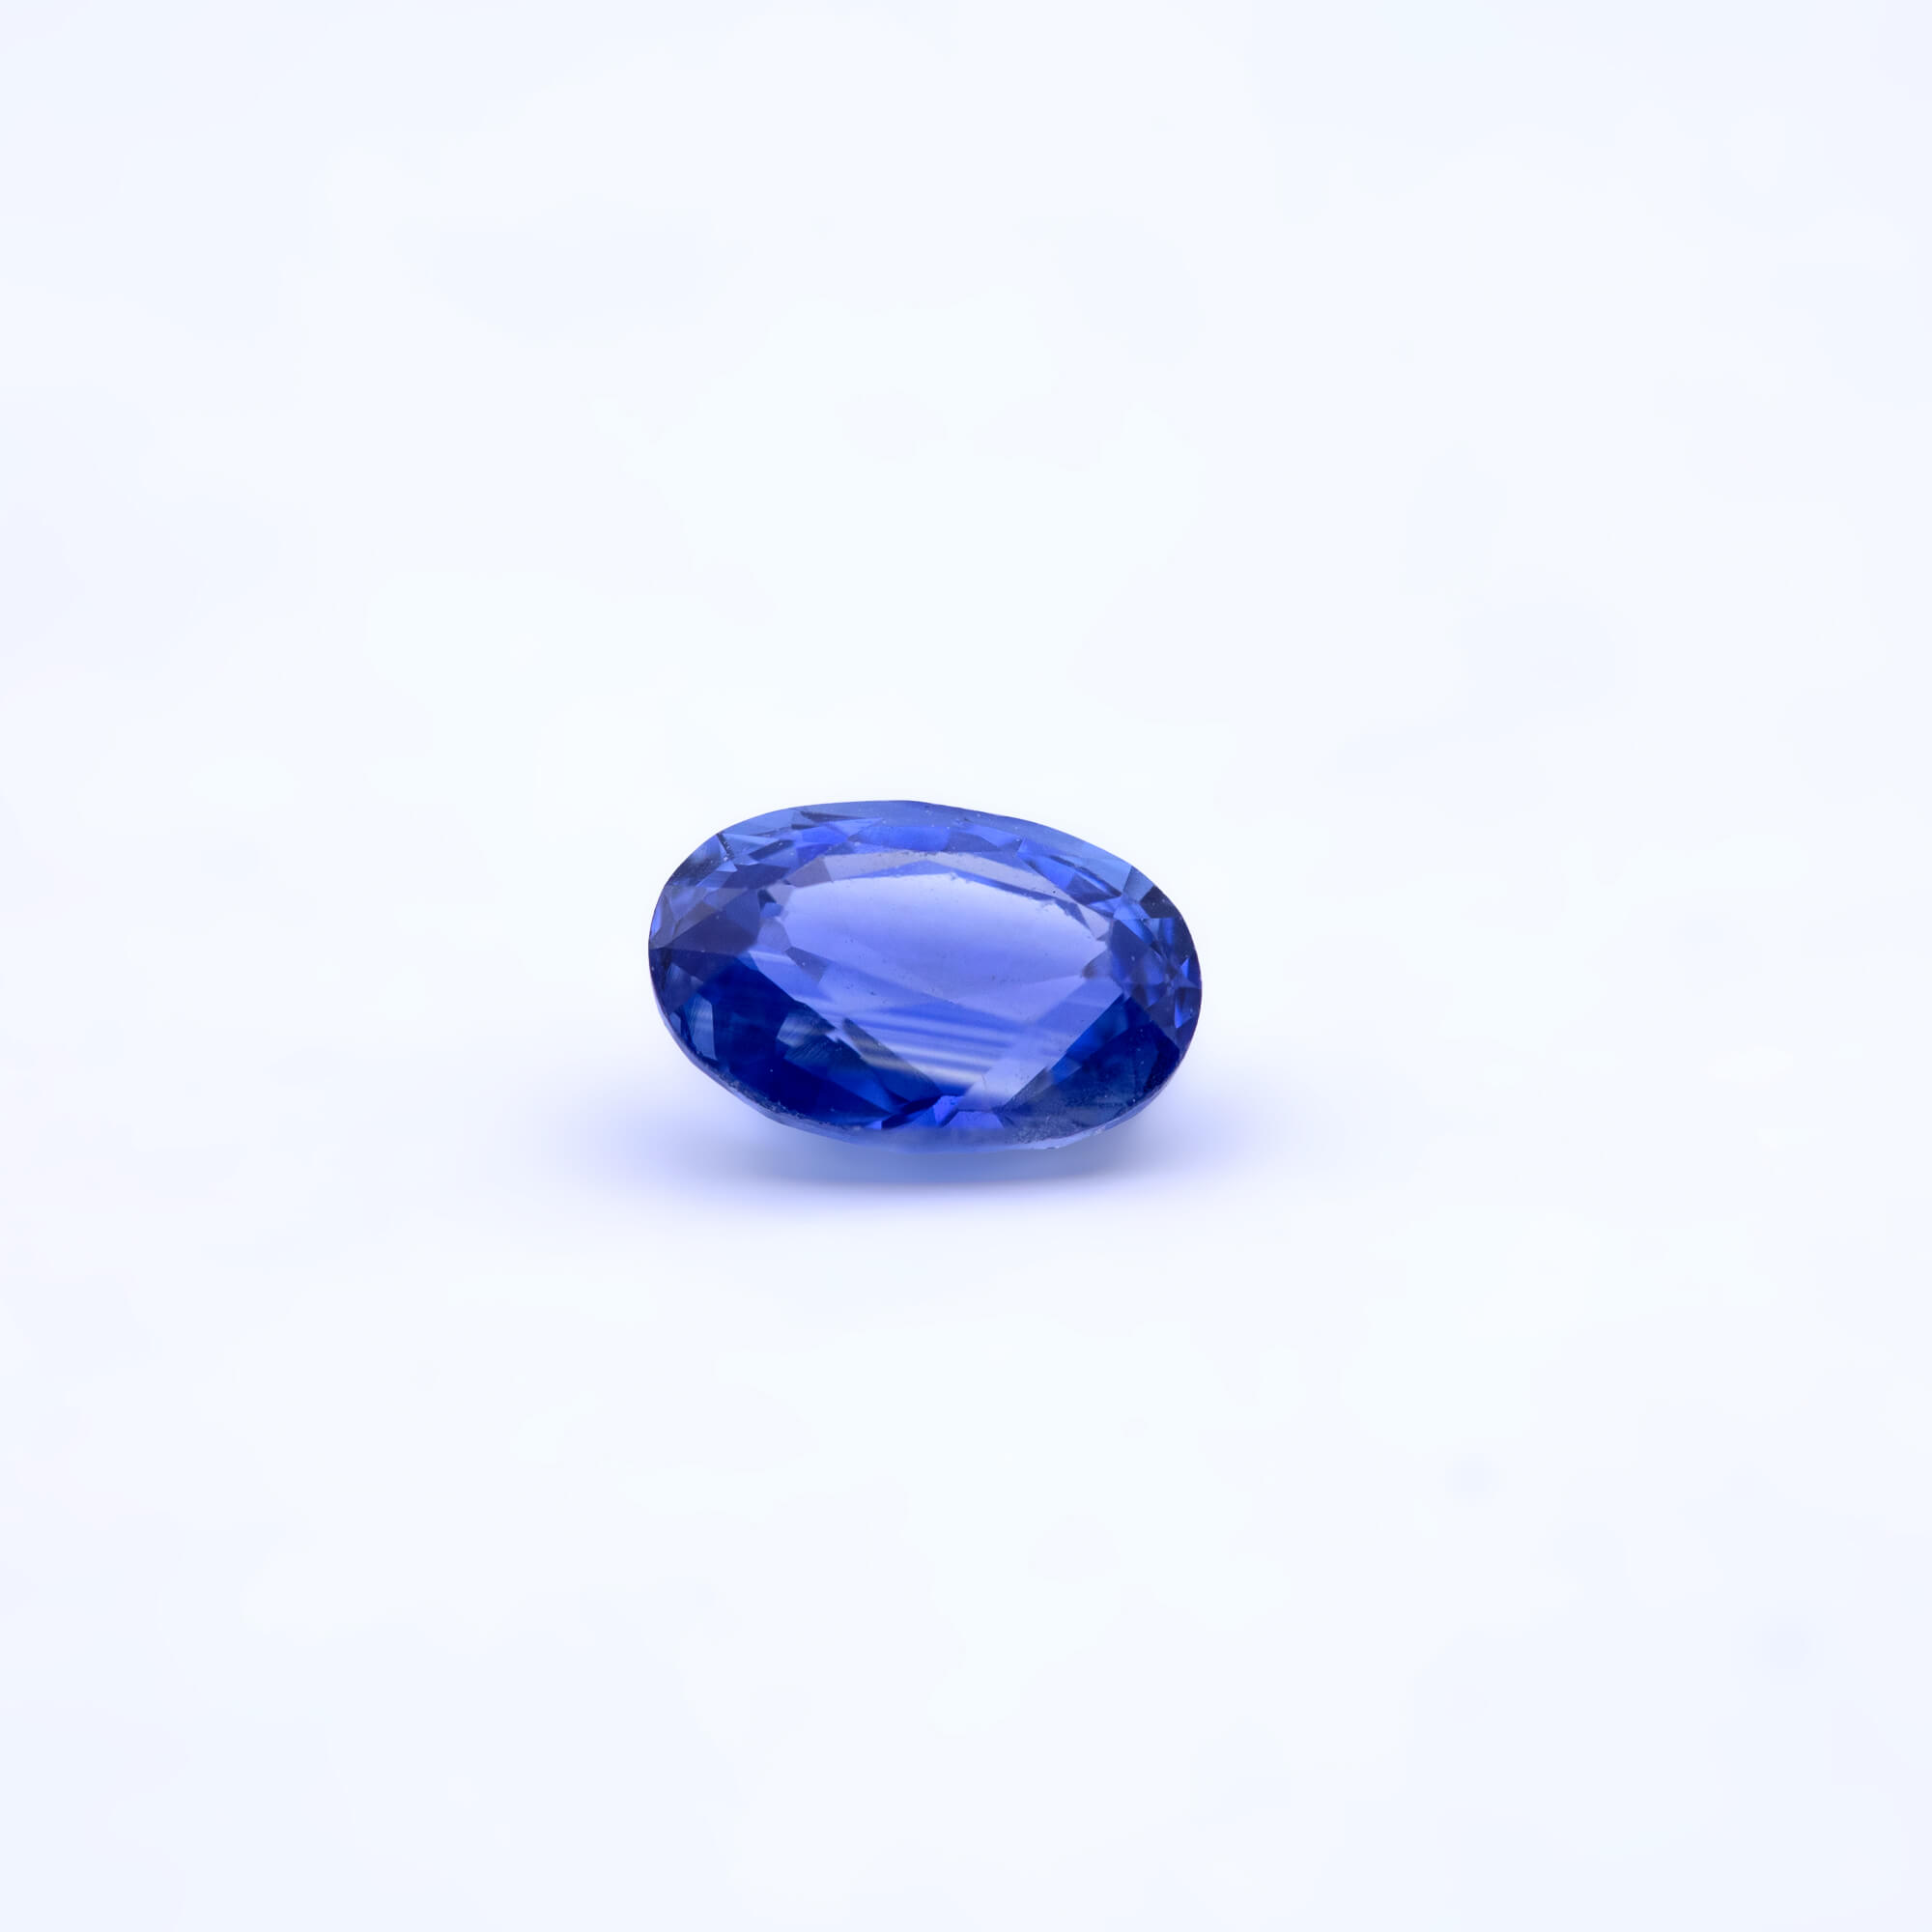 un-heated blue sapphire - 2